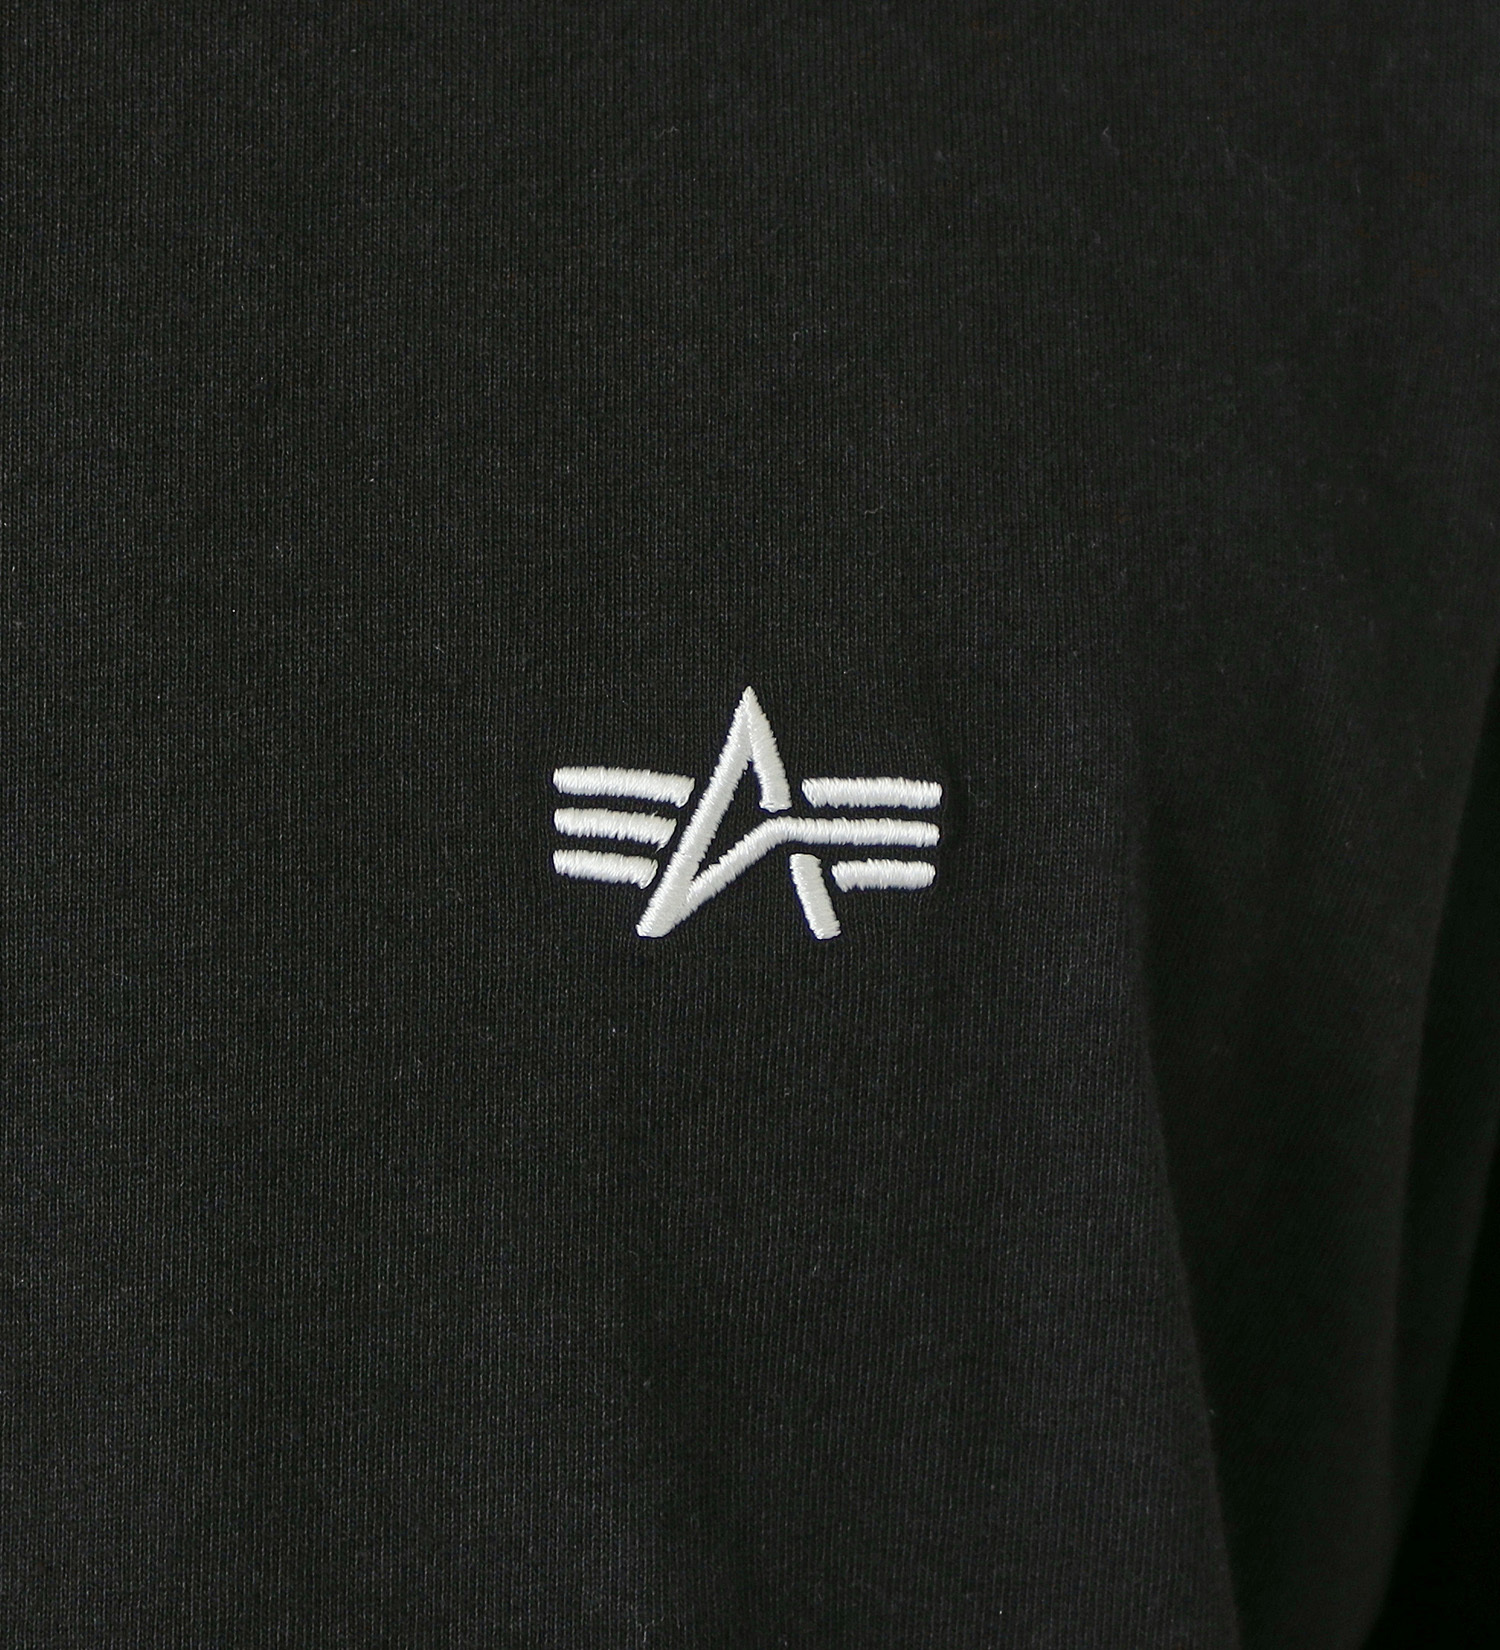 ALPHA(アルファ)の【GW SALE】バックプリントボックスロゴ 長袖Tシャツ(WIRE)|トップス/Tシャツ/カットソー/メンズ|ブラック